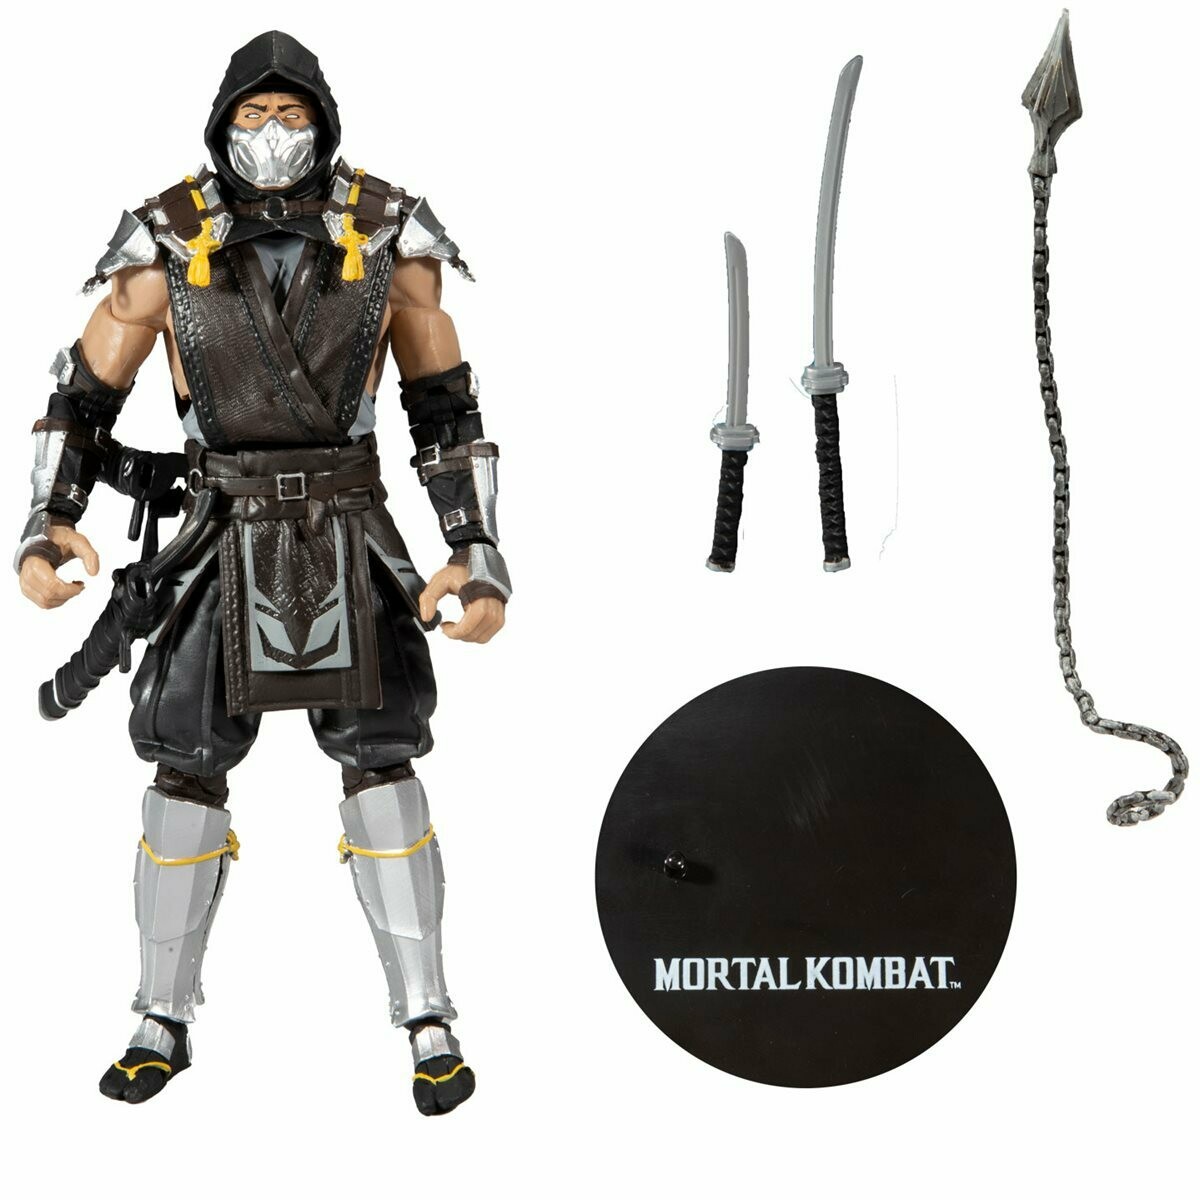 Mcfarlane Mortal Kombat Series 5 Scorpion in the Shadows Variant Action Figure